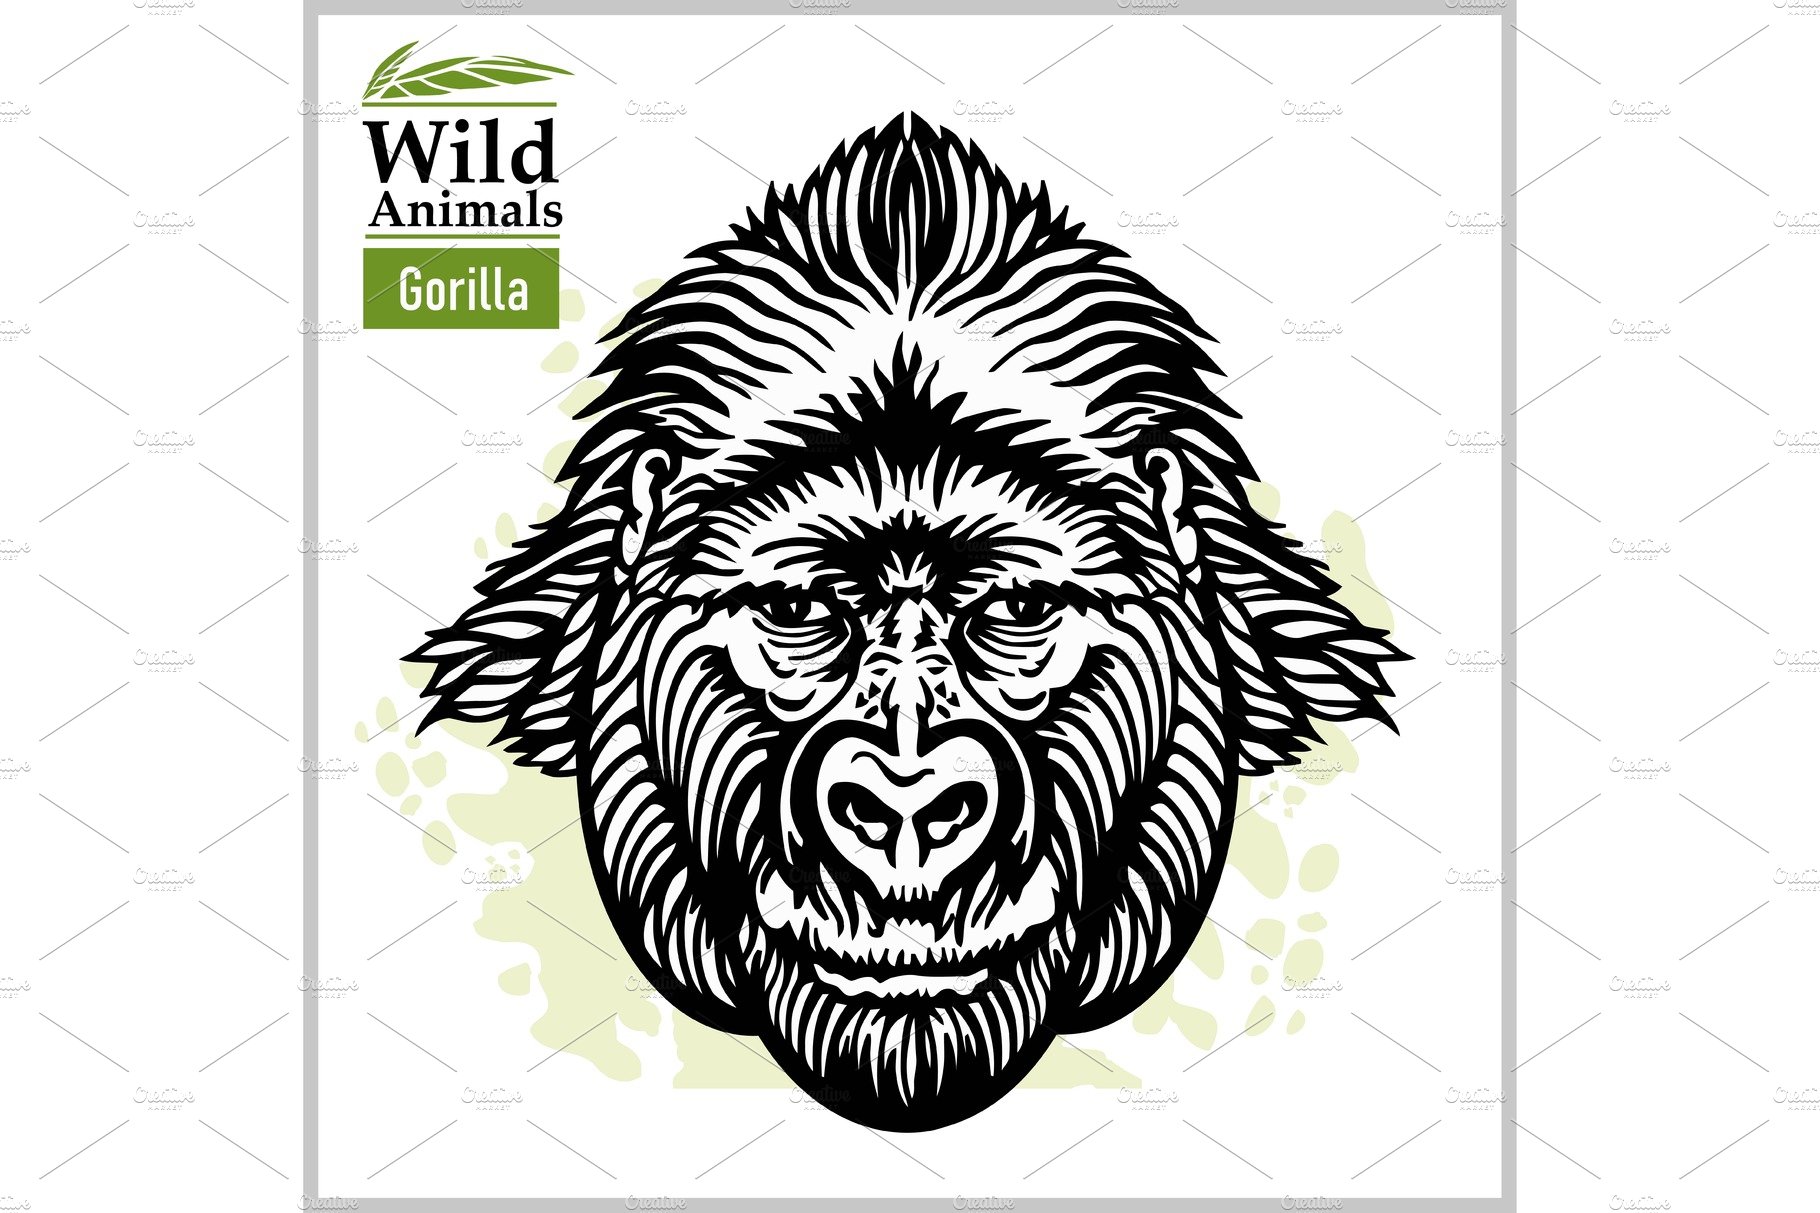 Gorilla head - symmetric front face cover image.